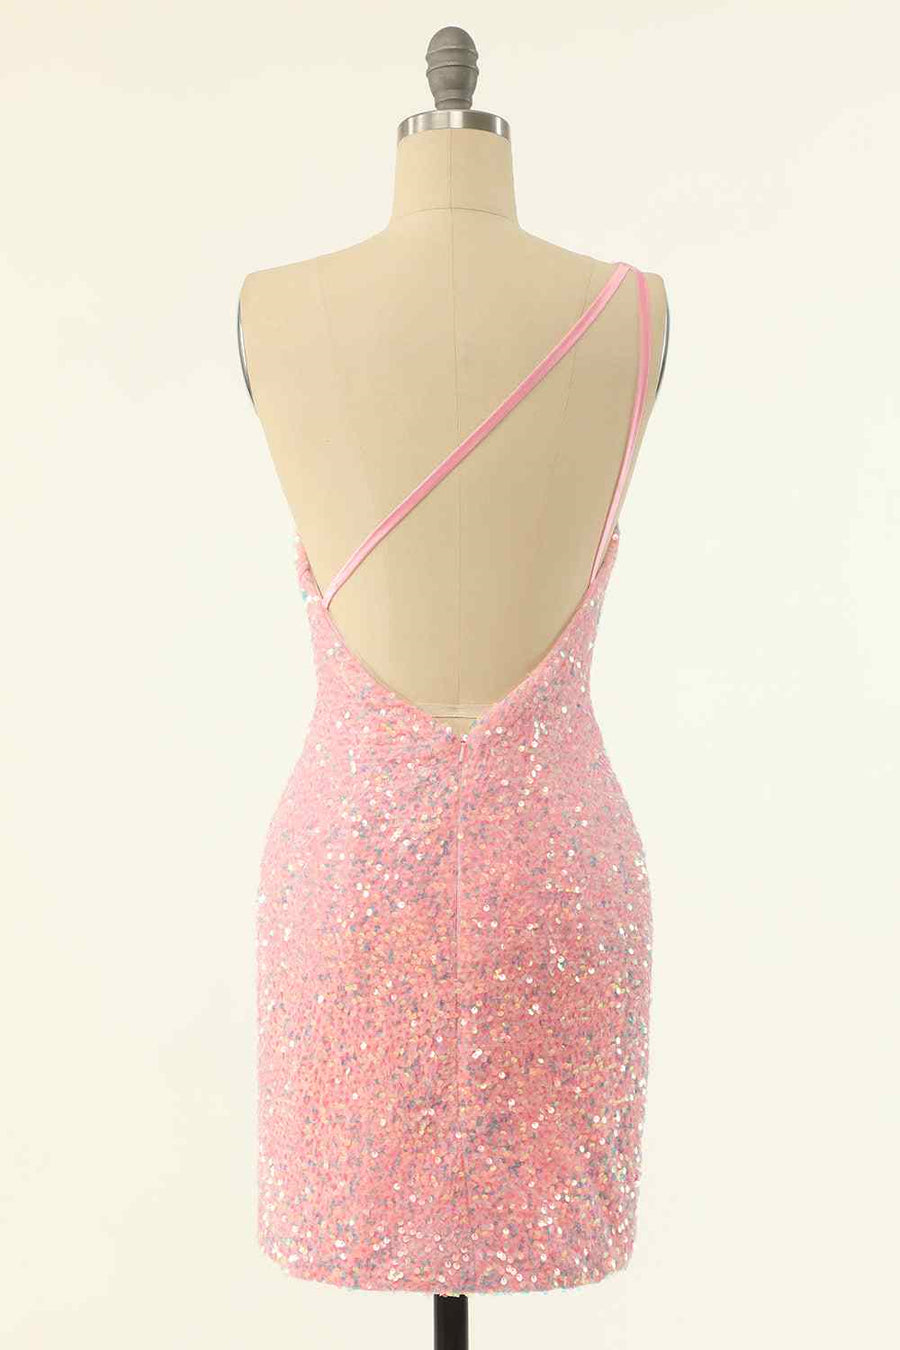 Pink Sheath One Shoulder Sequins Strap Back Mini Homecoming Dress